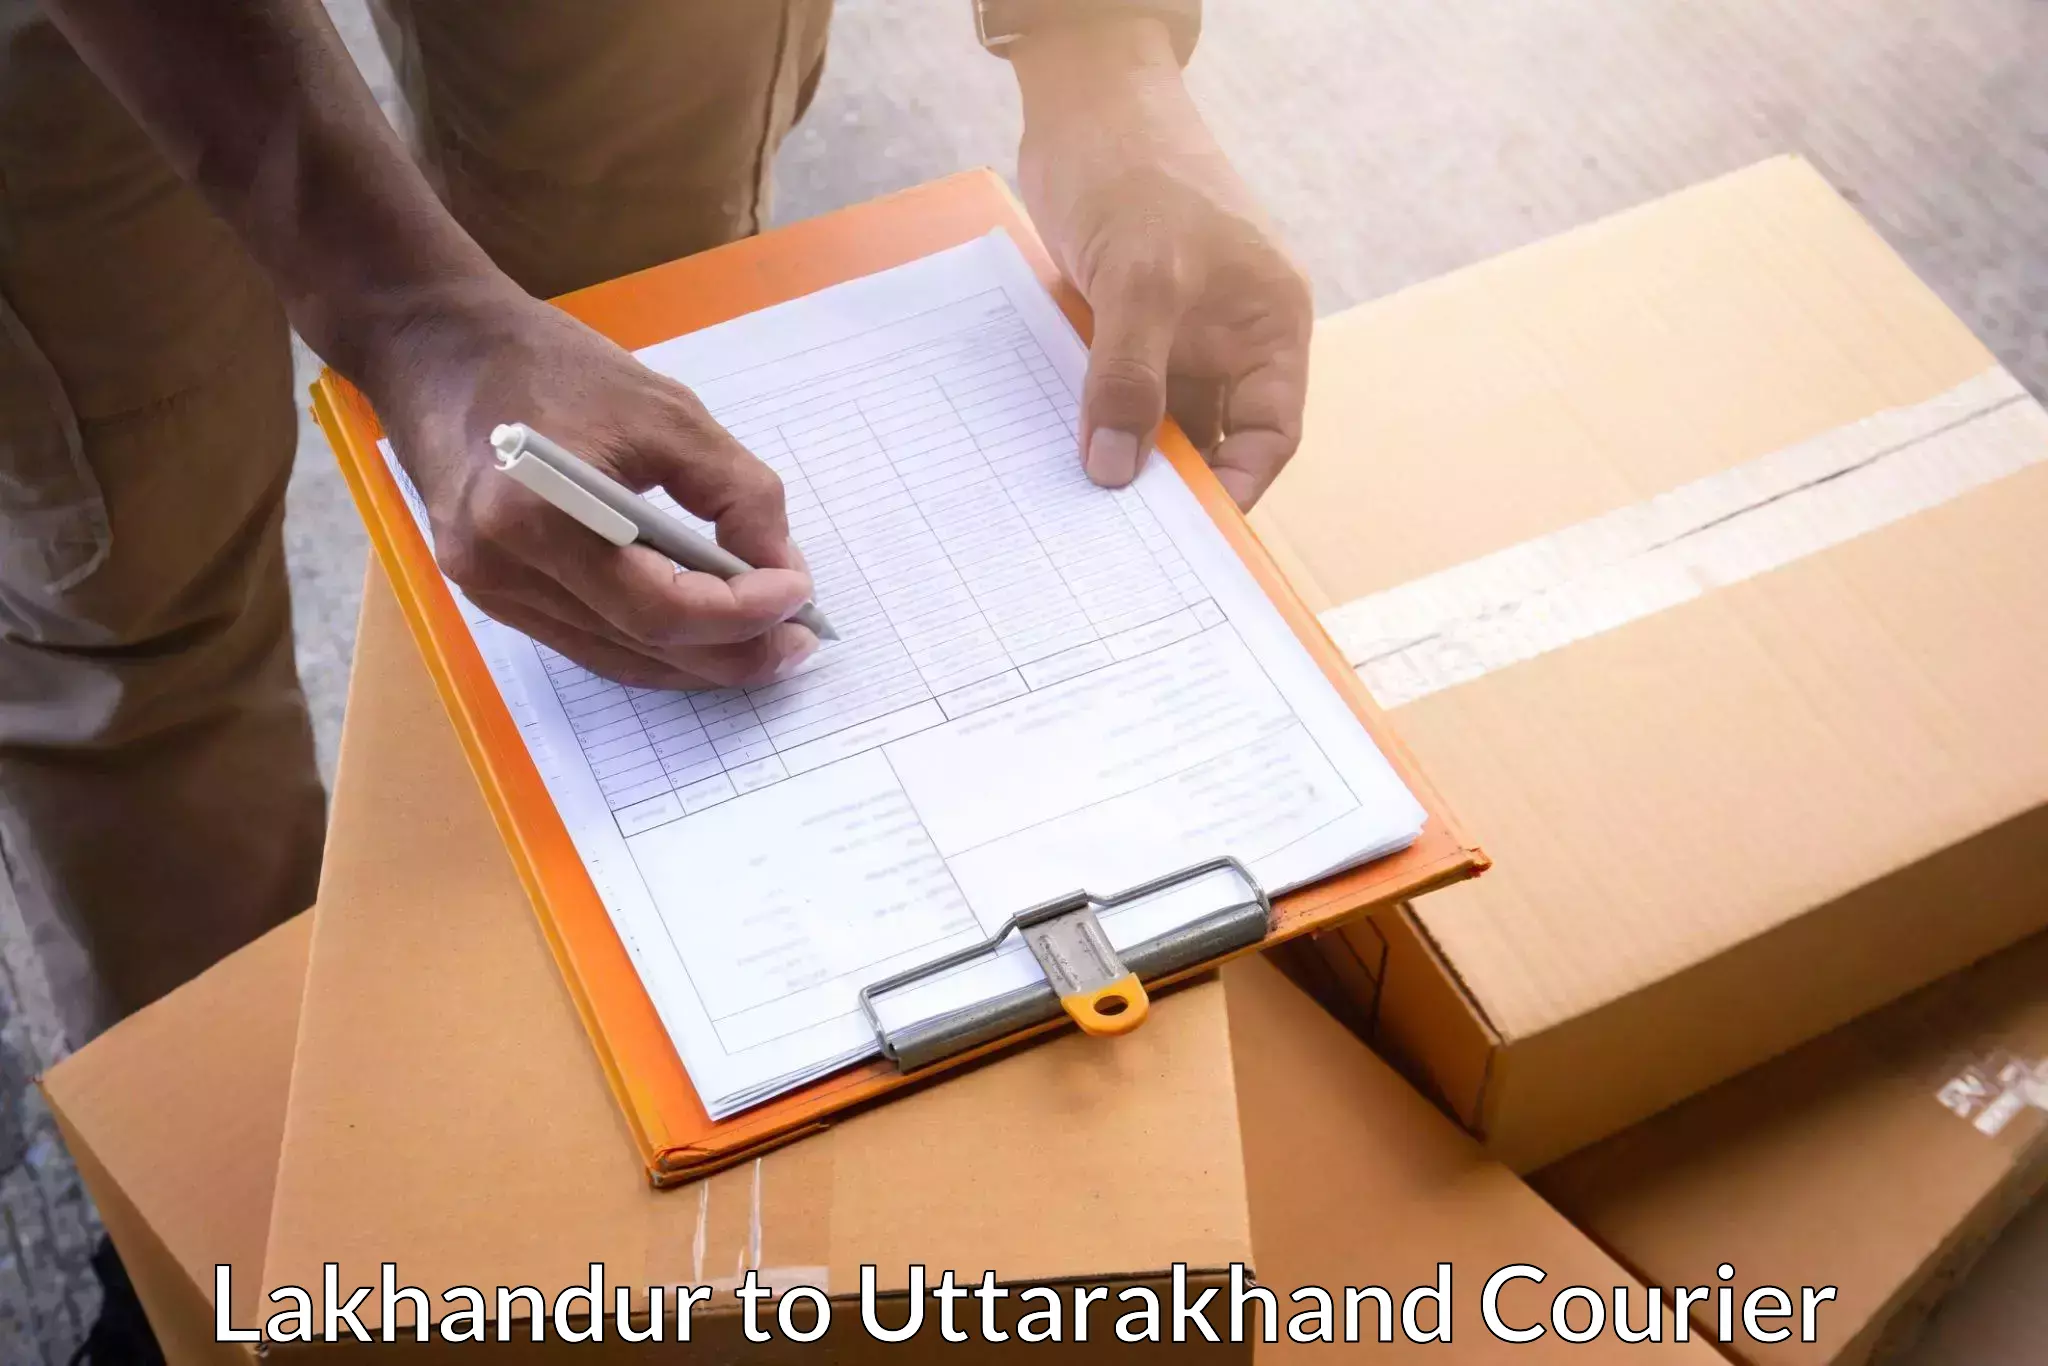 Modern delivery technologies Lakhandur to Kotdwara